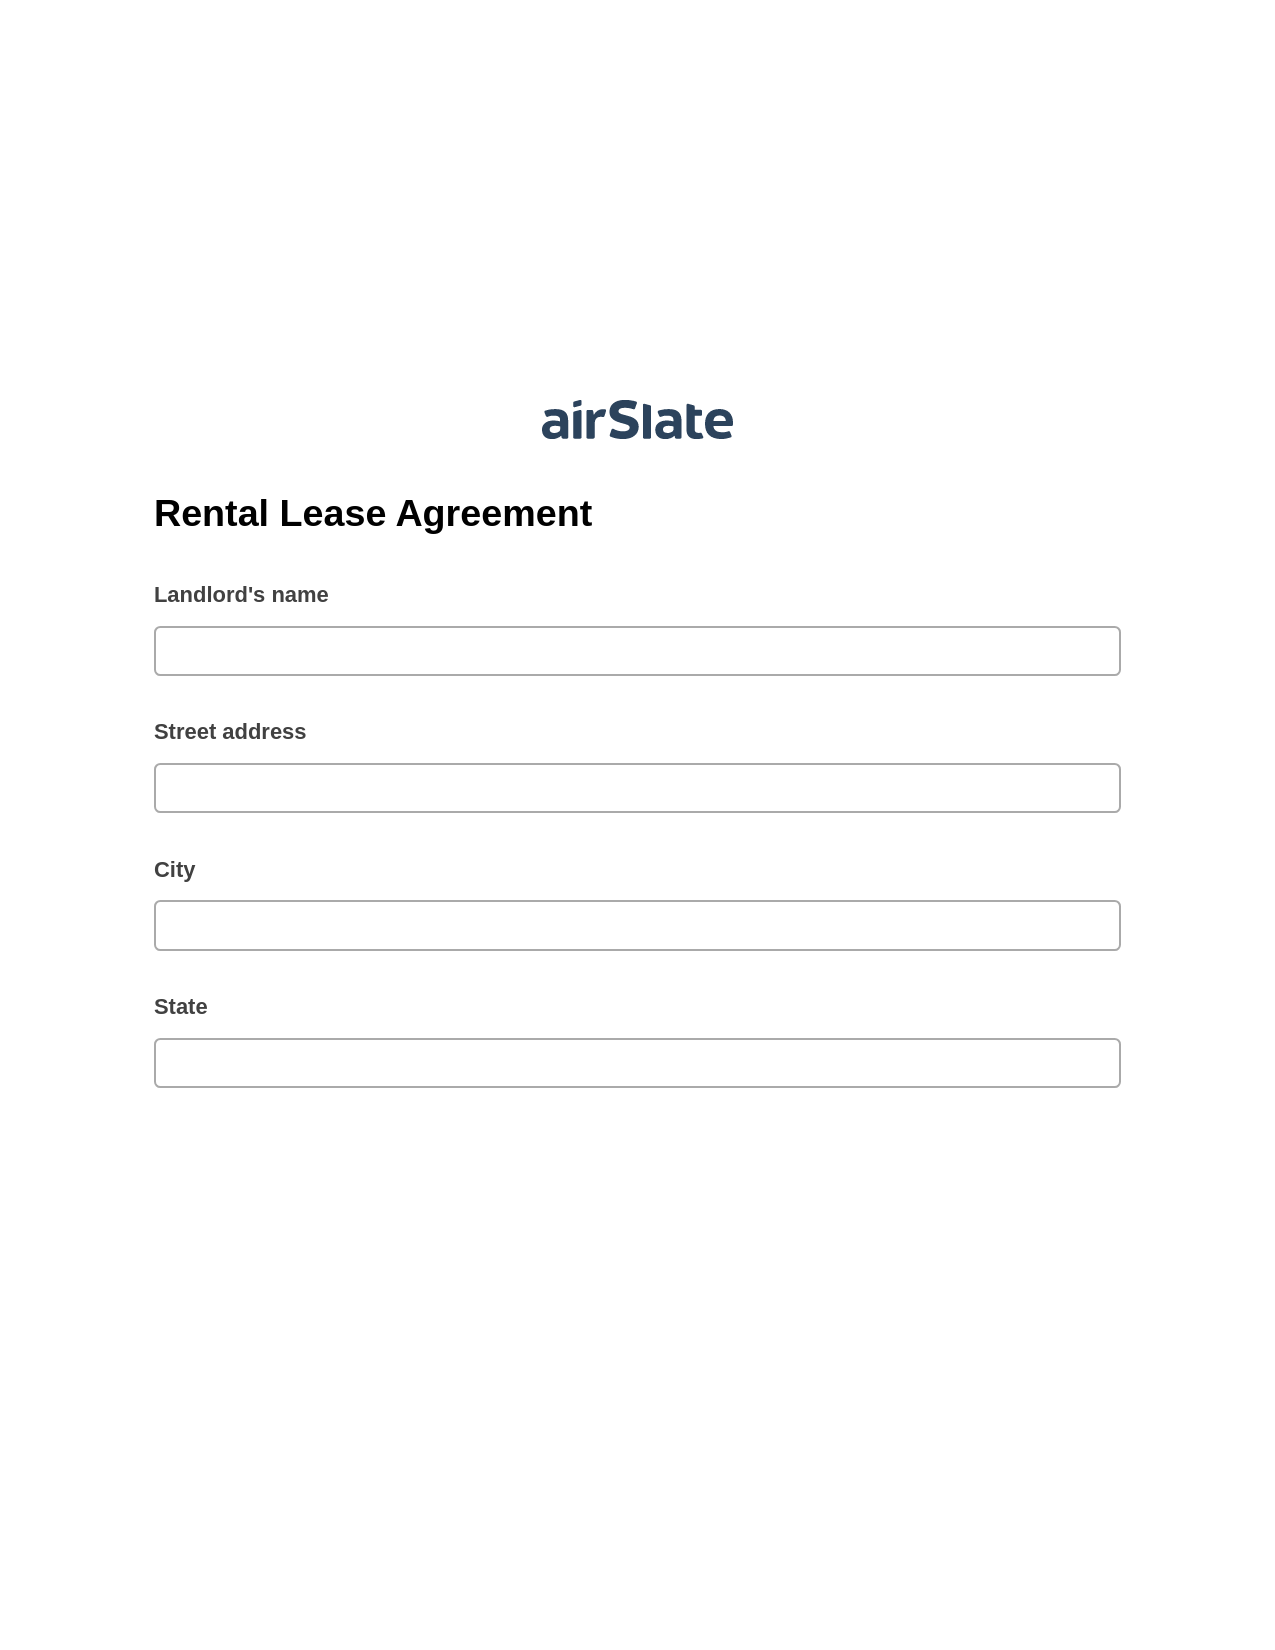 Multirole Rental Lease Agreement Pre-fill from CSV File Dropdown Options Bot, Invoke Salesforce Process Bot, Post-finish Document Bot